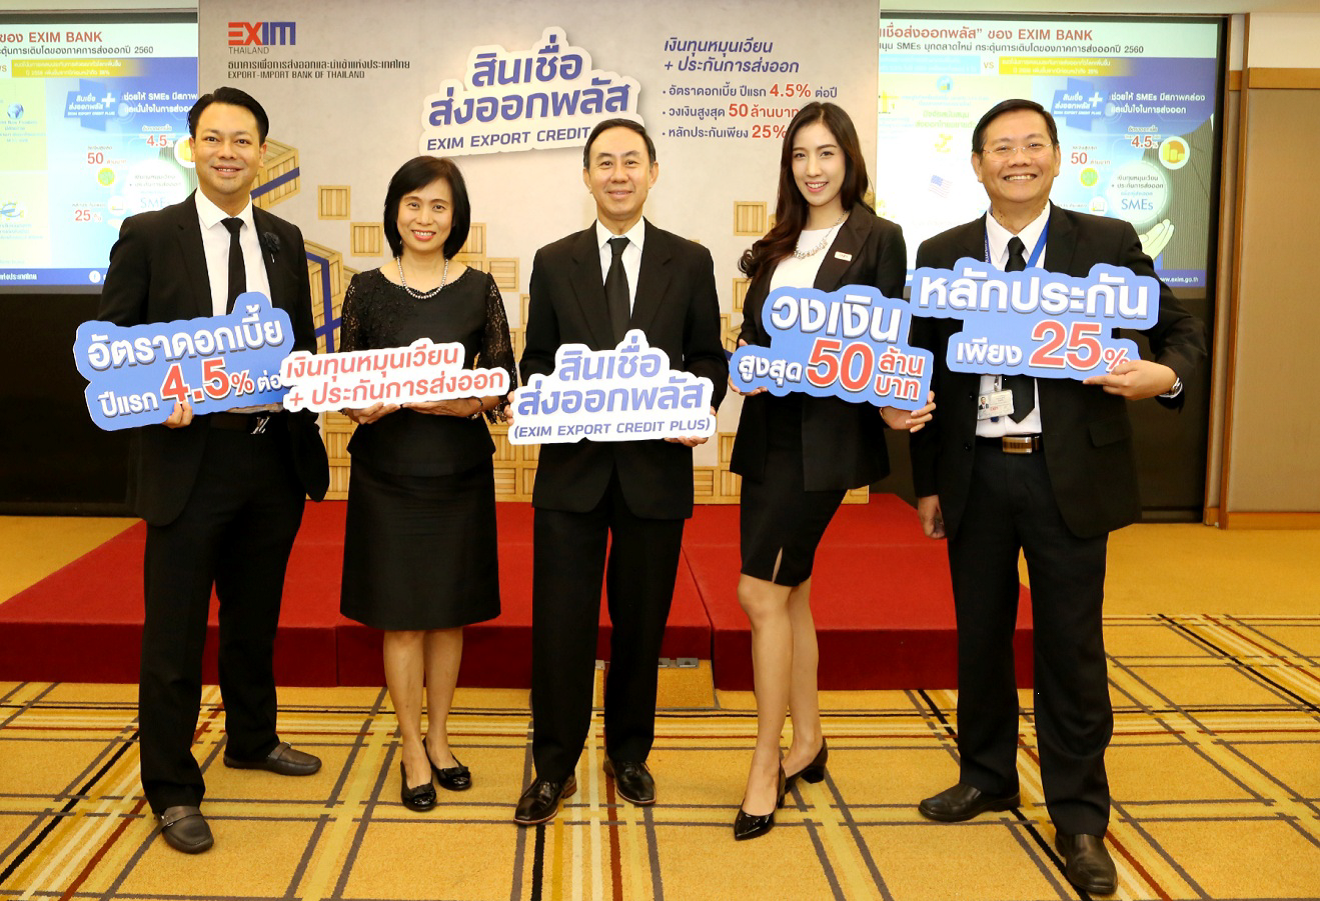 EXIM Thailand Offers "EXIM Export Credit Plus" to Boost Thai SME Exporters’ Liquidity and Confidence